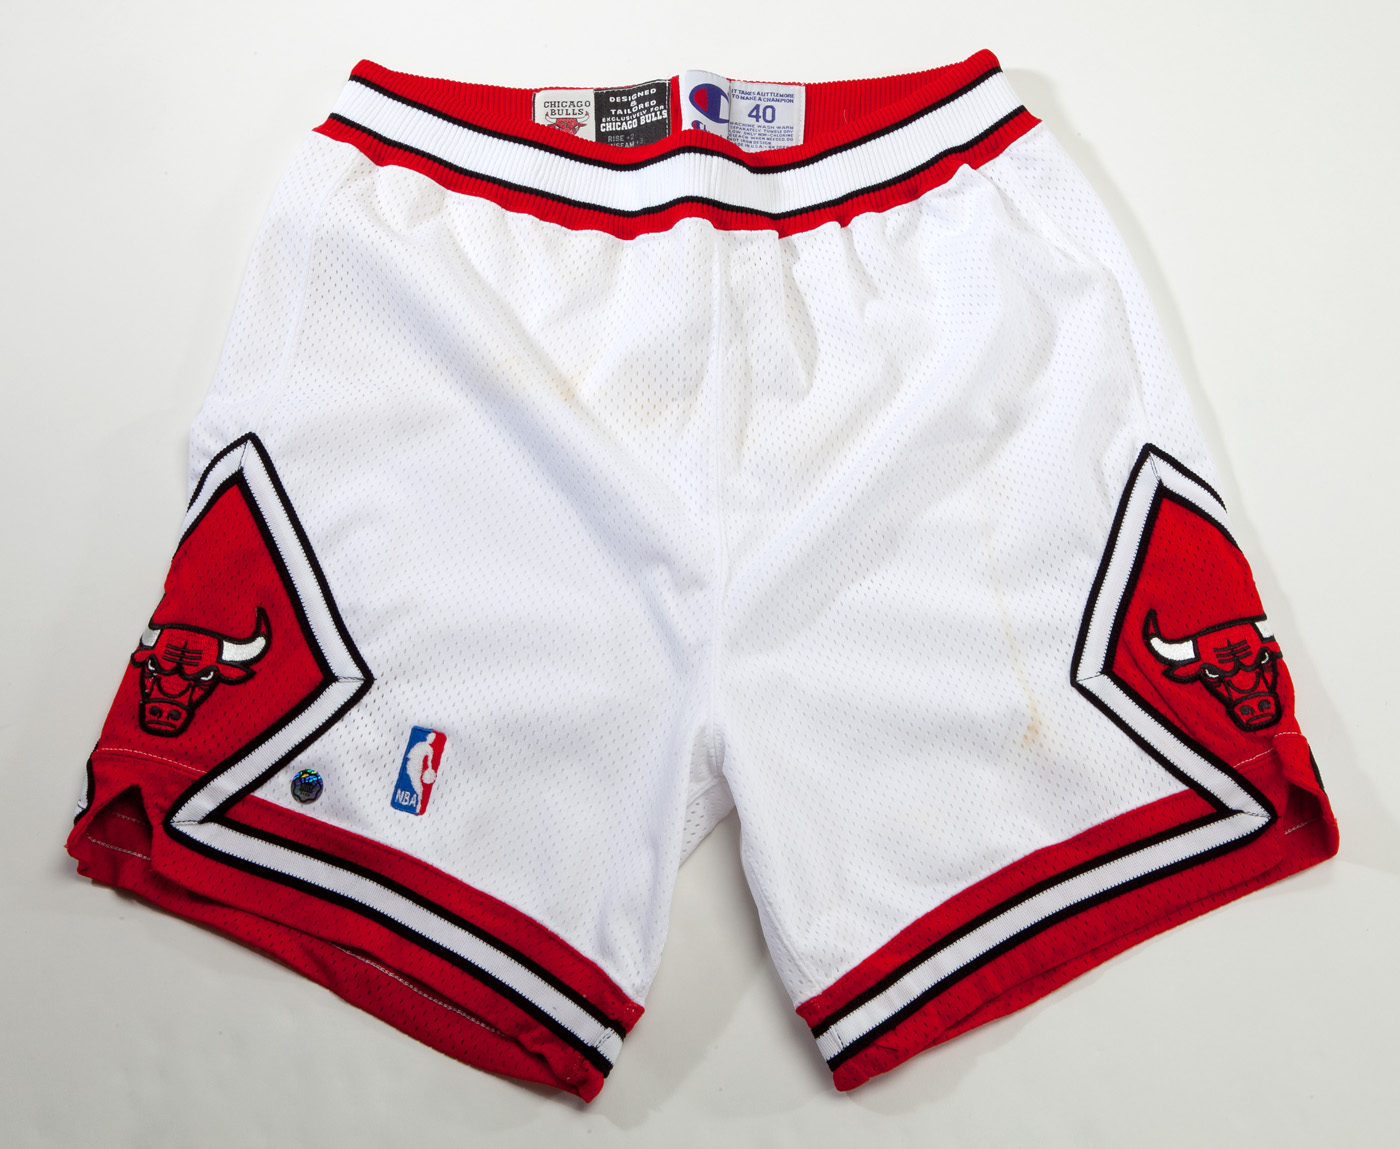 KD knows the VIBE! @Toni Kukoč, Chicago Bulls 95-96 Swingman :  r/basketballjerseys